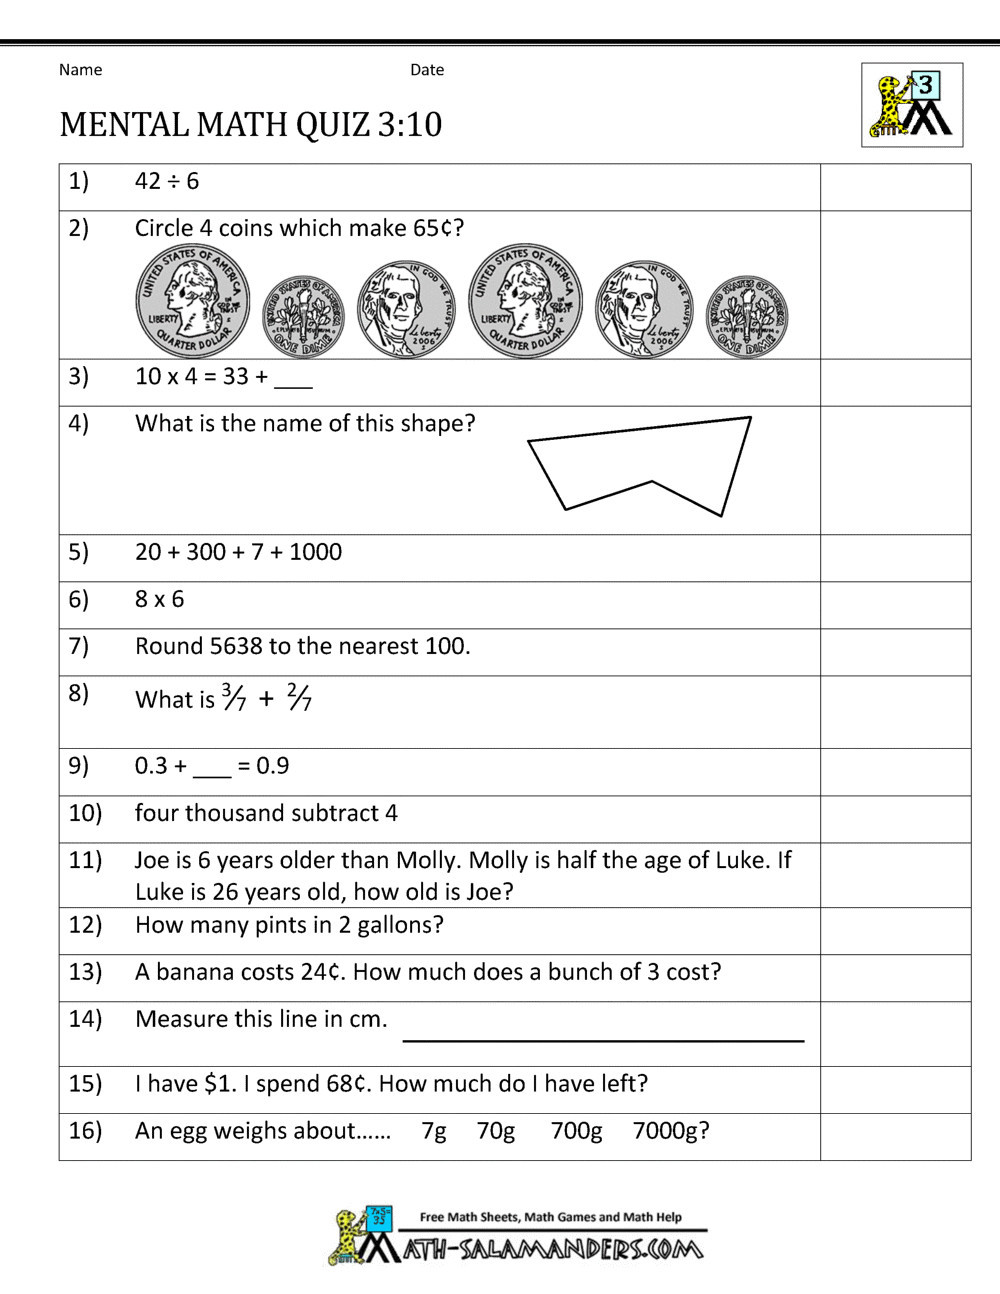 Mental Math Worksheets Grade 3 4 Free Math Worksheets Third Grade 3 Word Problems Mixed